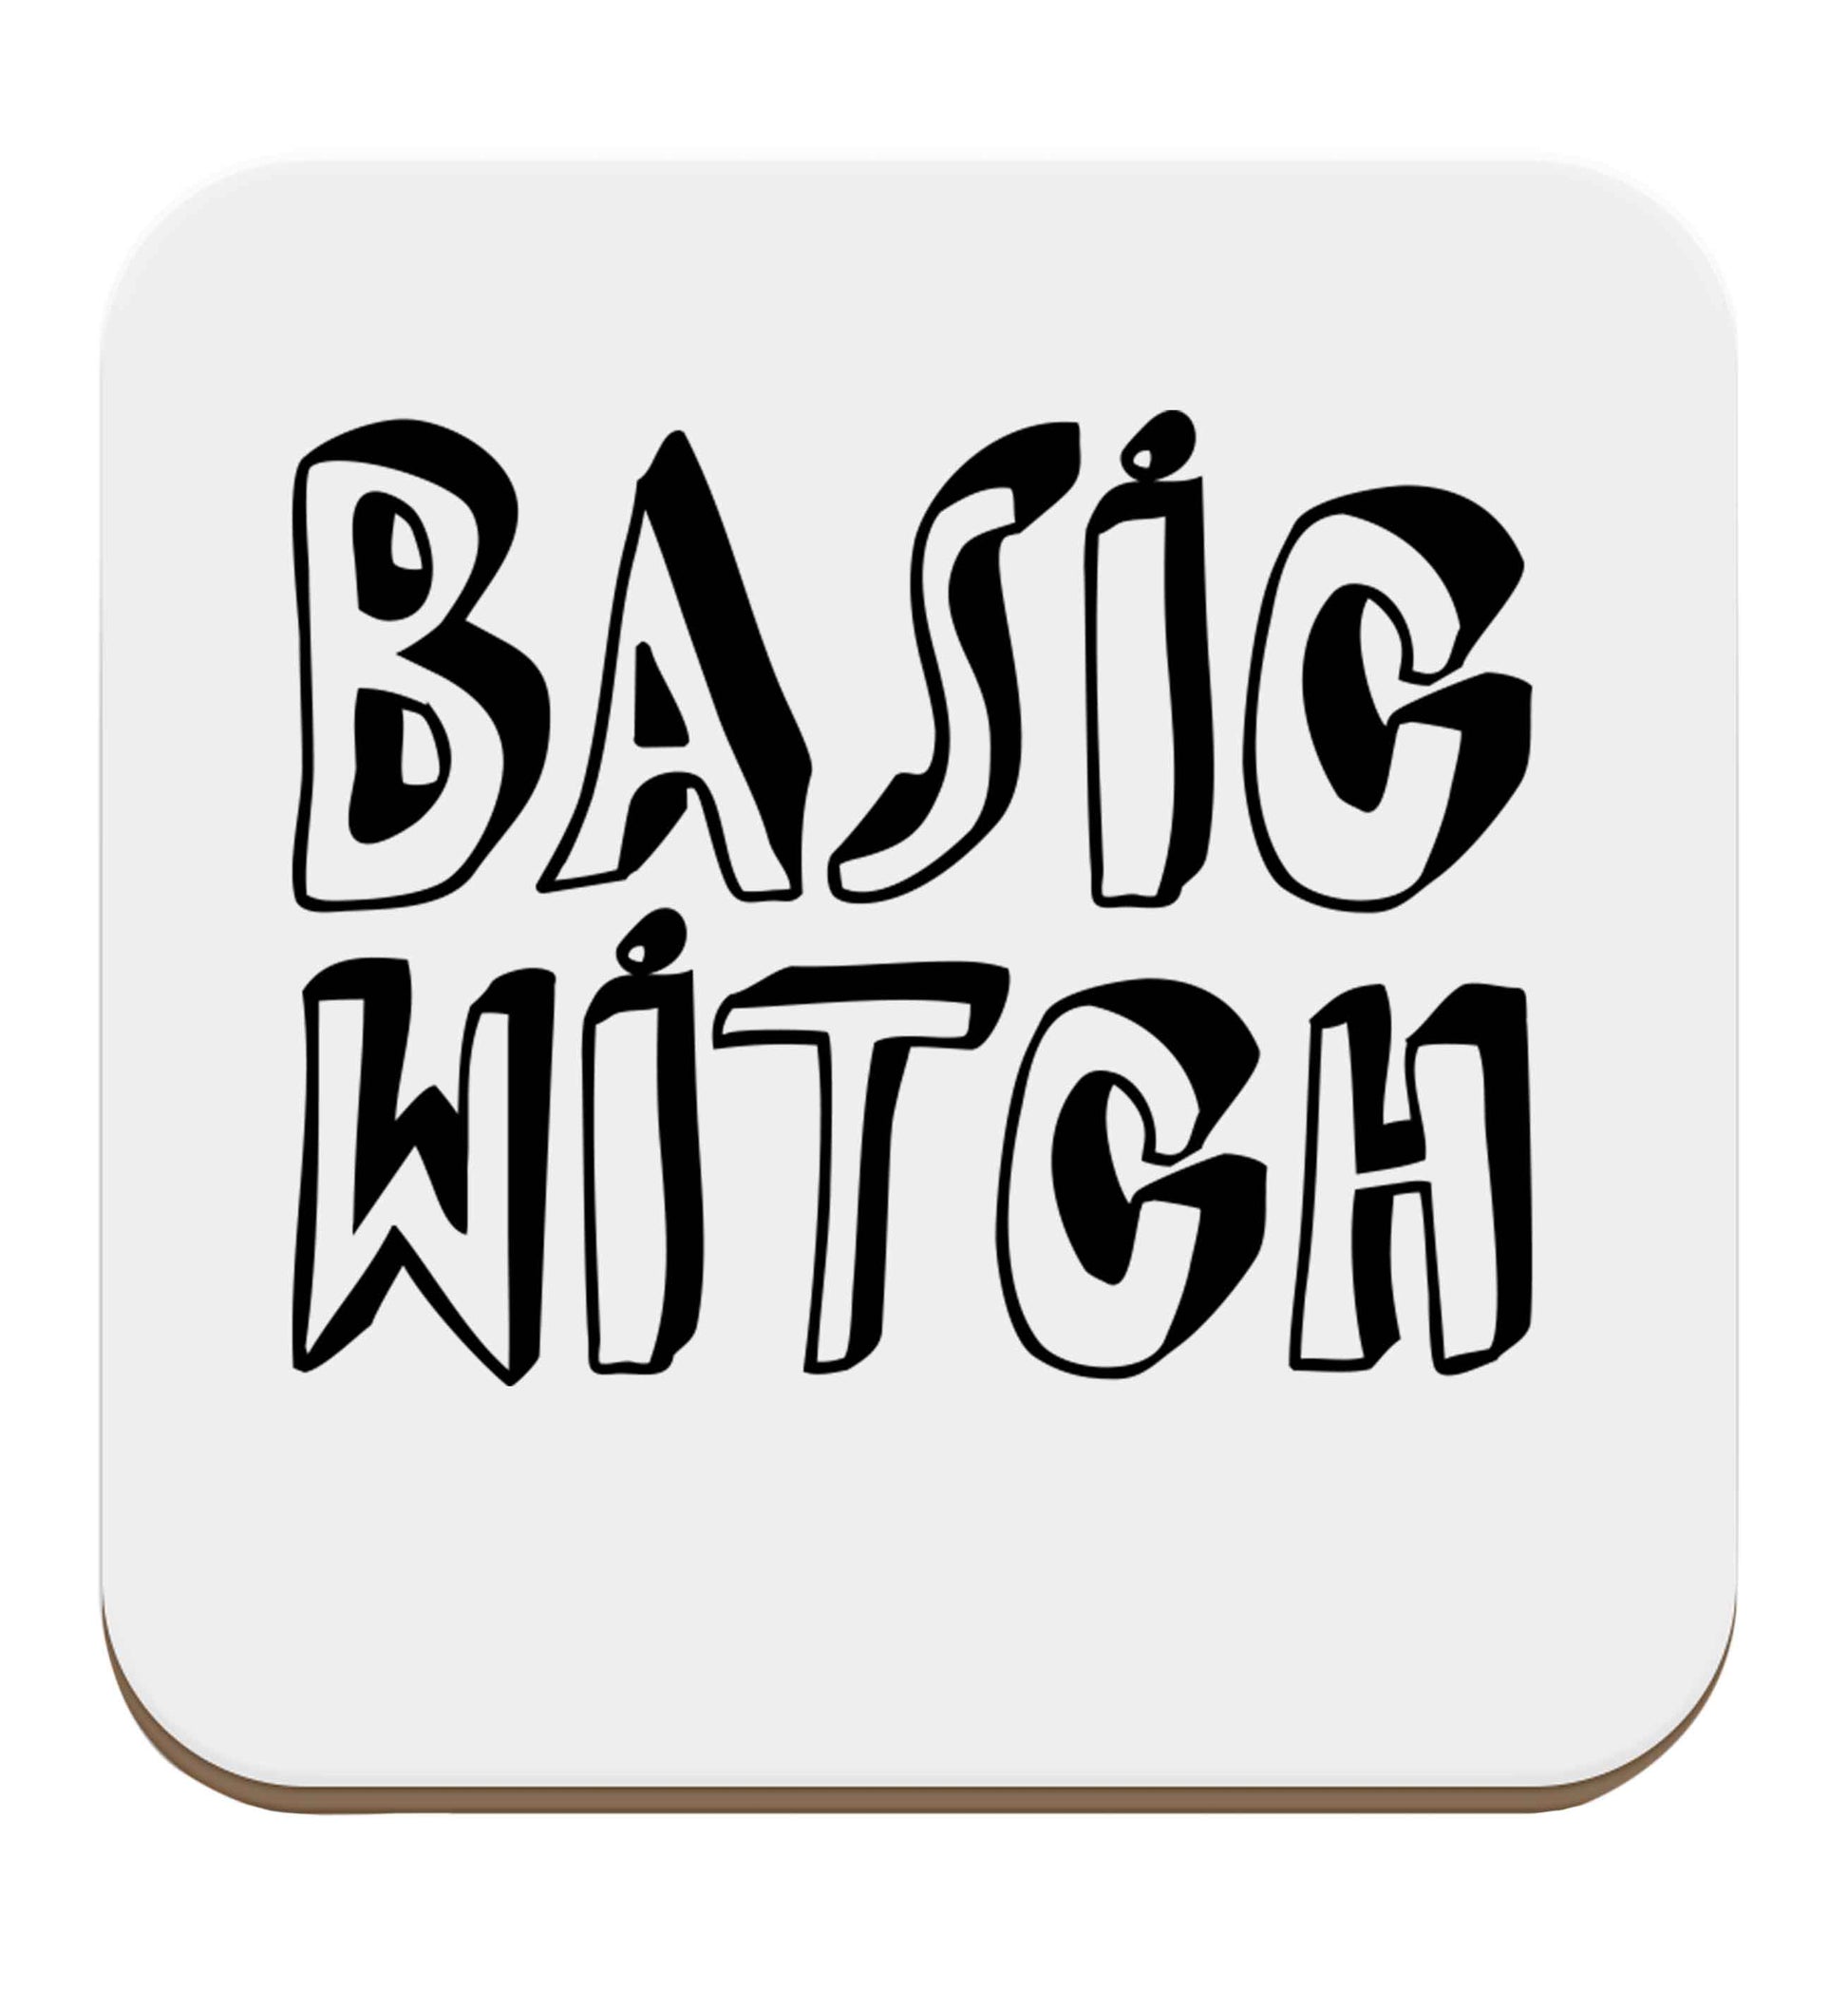 Basic witch set of four coasters